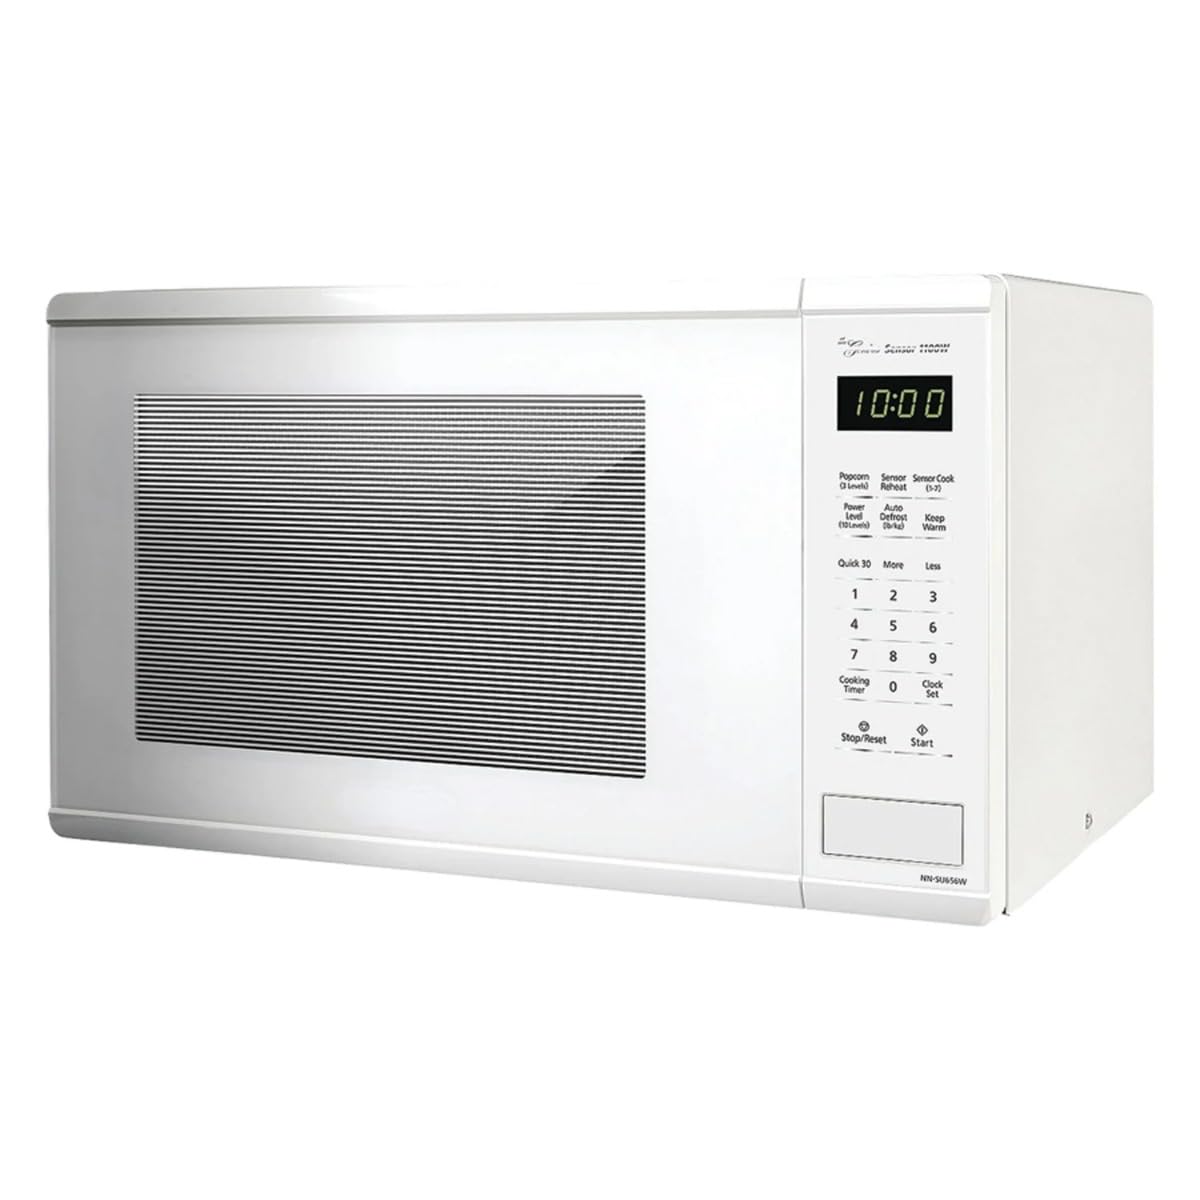 1.3 Cu. ft. 1100W Genius Sensor Countertop Microwave Oven in White